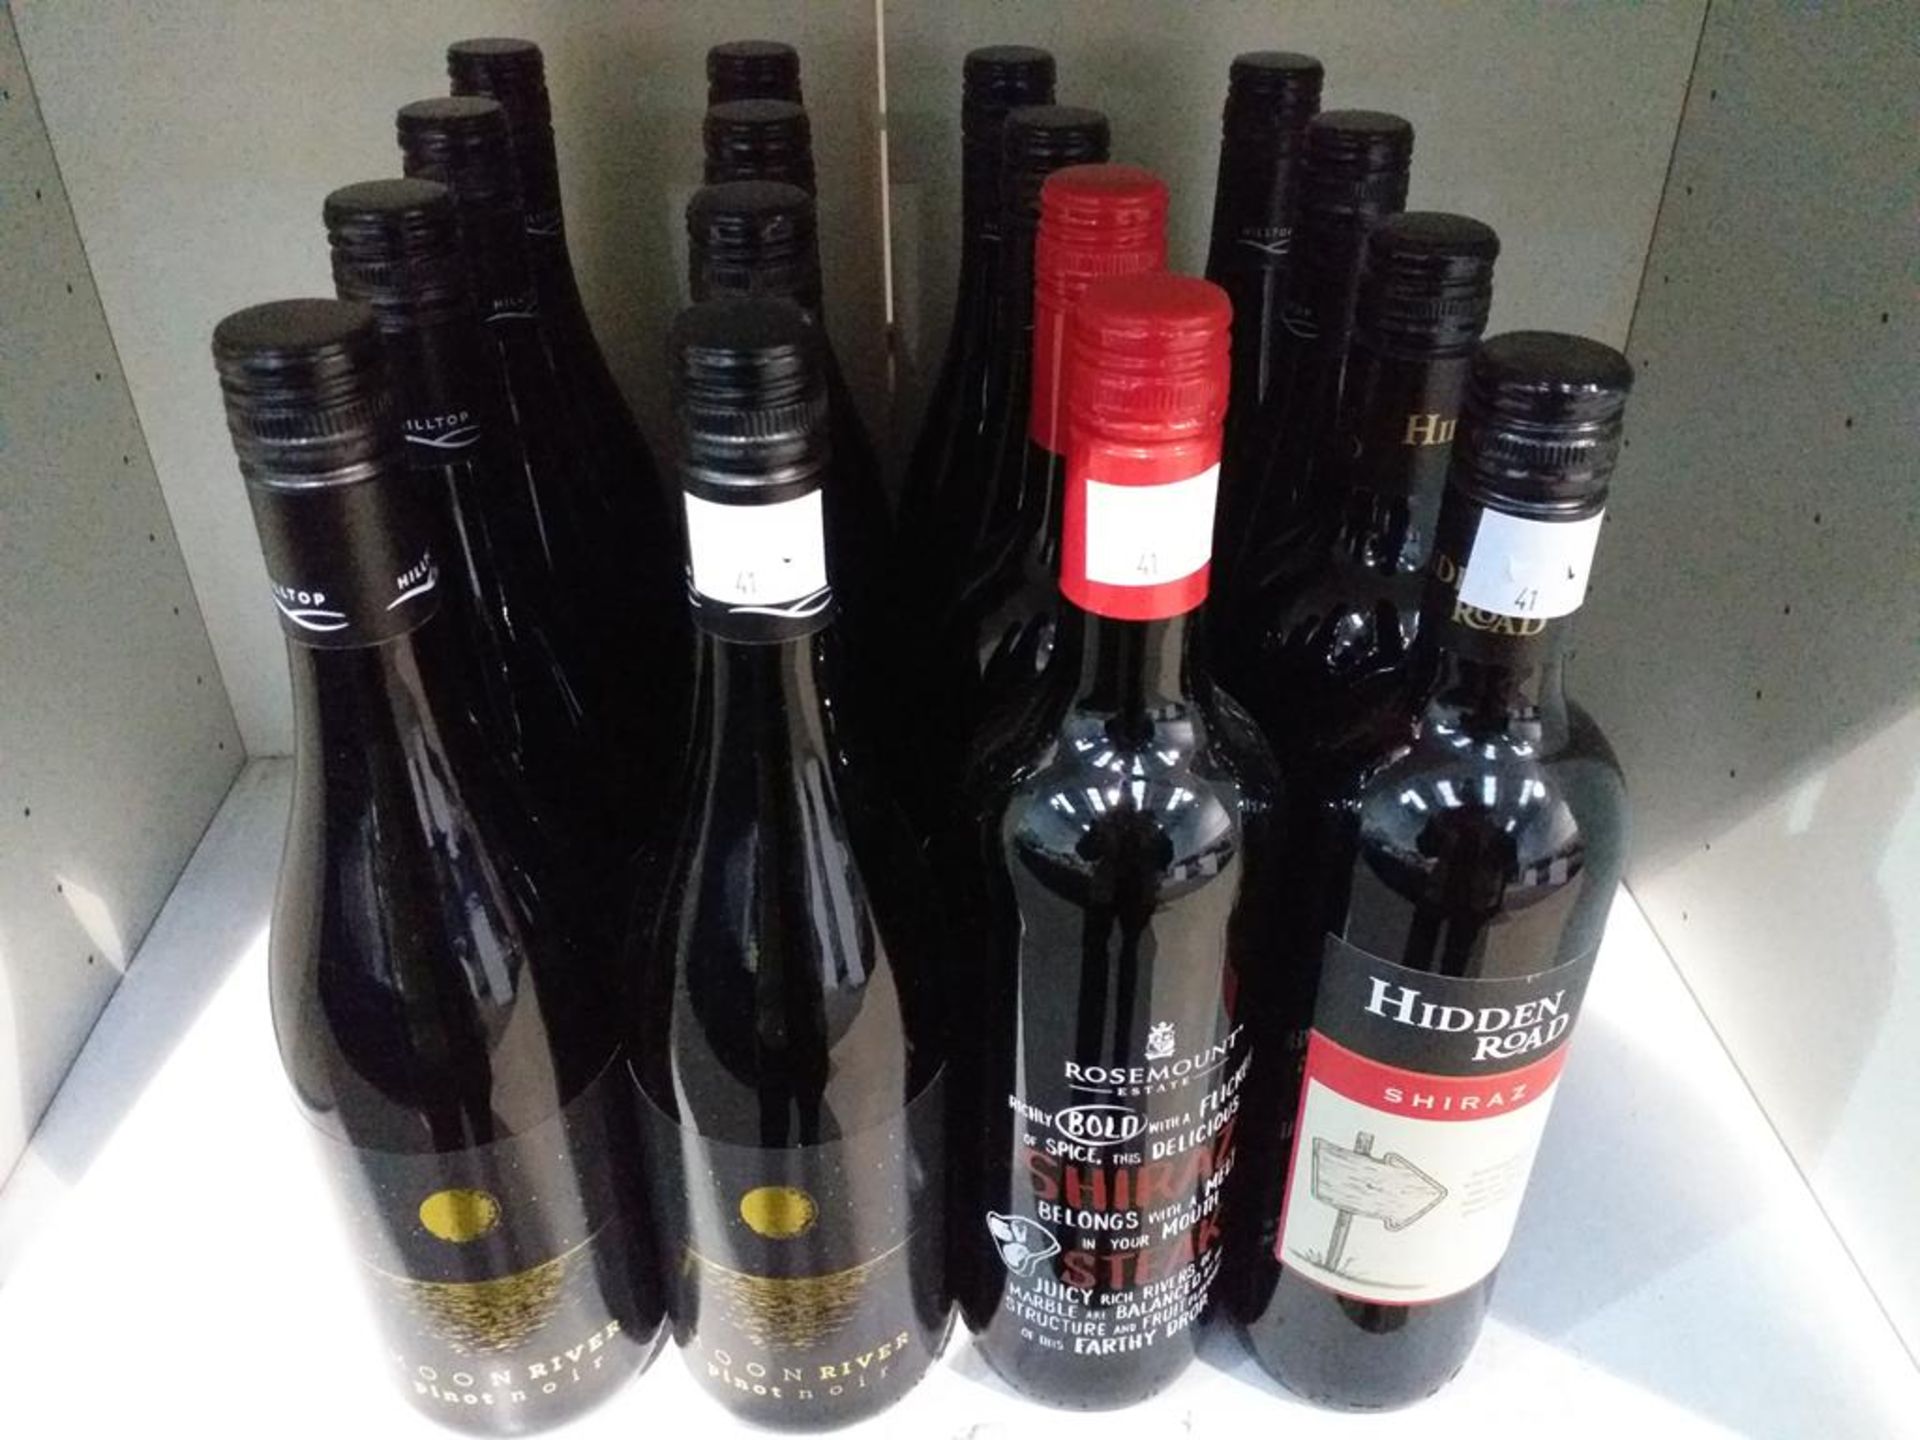 Twelve bottles of Hilltop Moon River Pinot Noir, two bottles of Rosemount Estate Shiraz Red Wine and